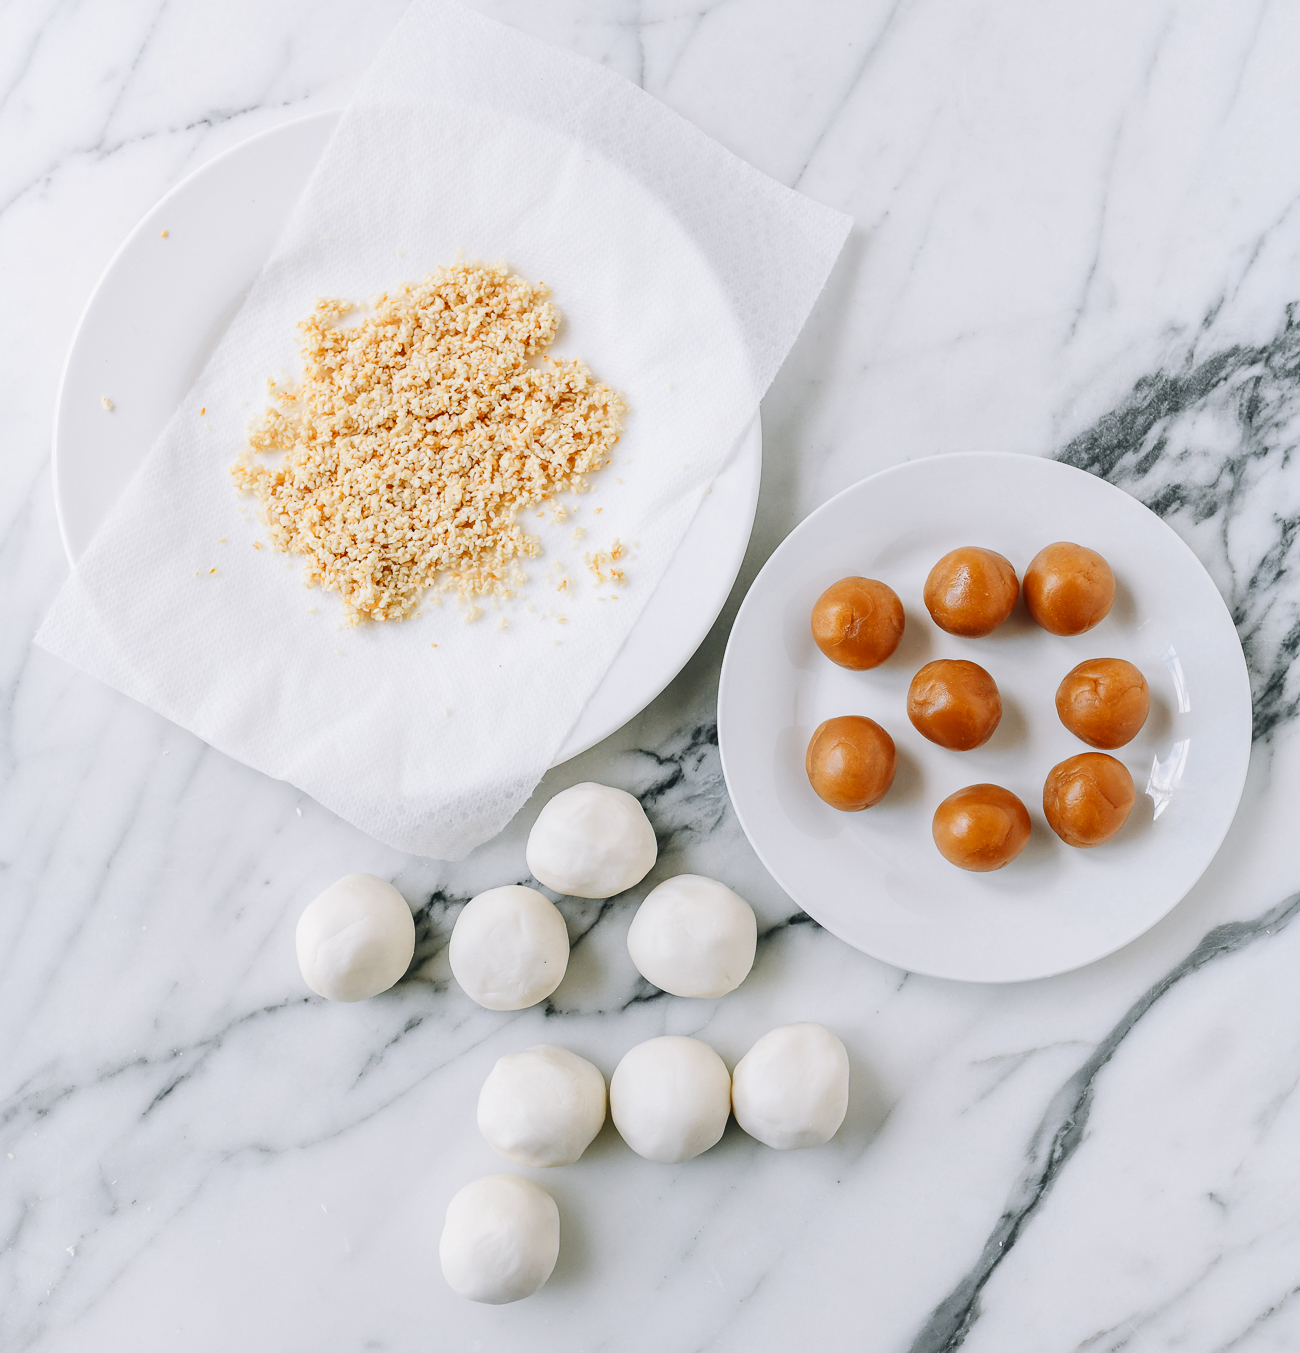 Sesame seeds, lotus paste, and sesame ball dough